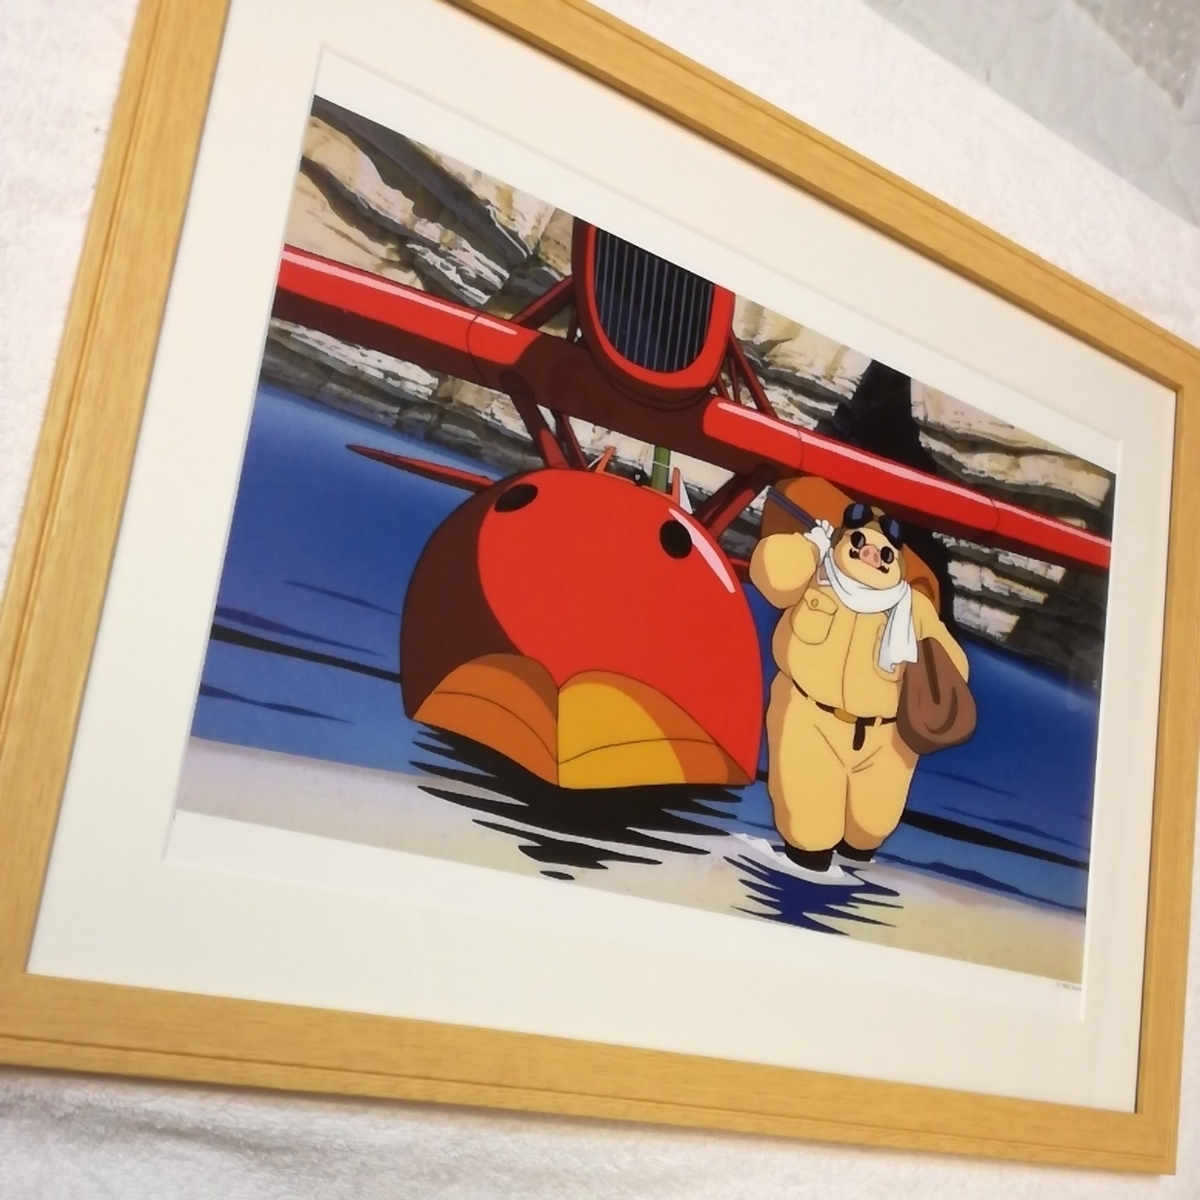 Sehr selten! Studio Ghibli Porco Rosso [Gerahmter Artikel] Ghibli-Kalender Ghibli-Poster Wandbehang Gemälde Postkarte Reproduktion Originalkunstwerk Hayao Miyazaki Porco, Comics, Anime-Waren, Andere